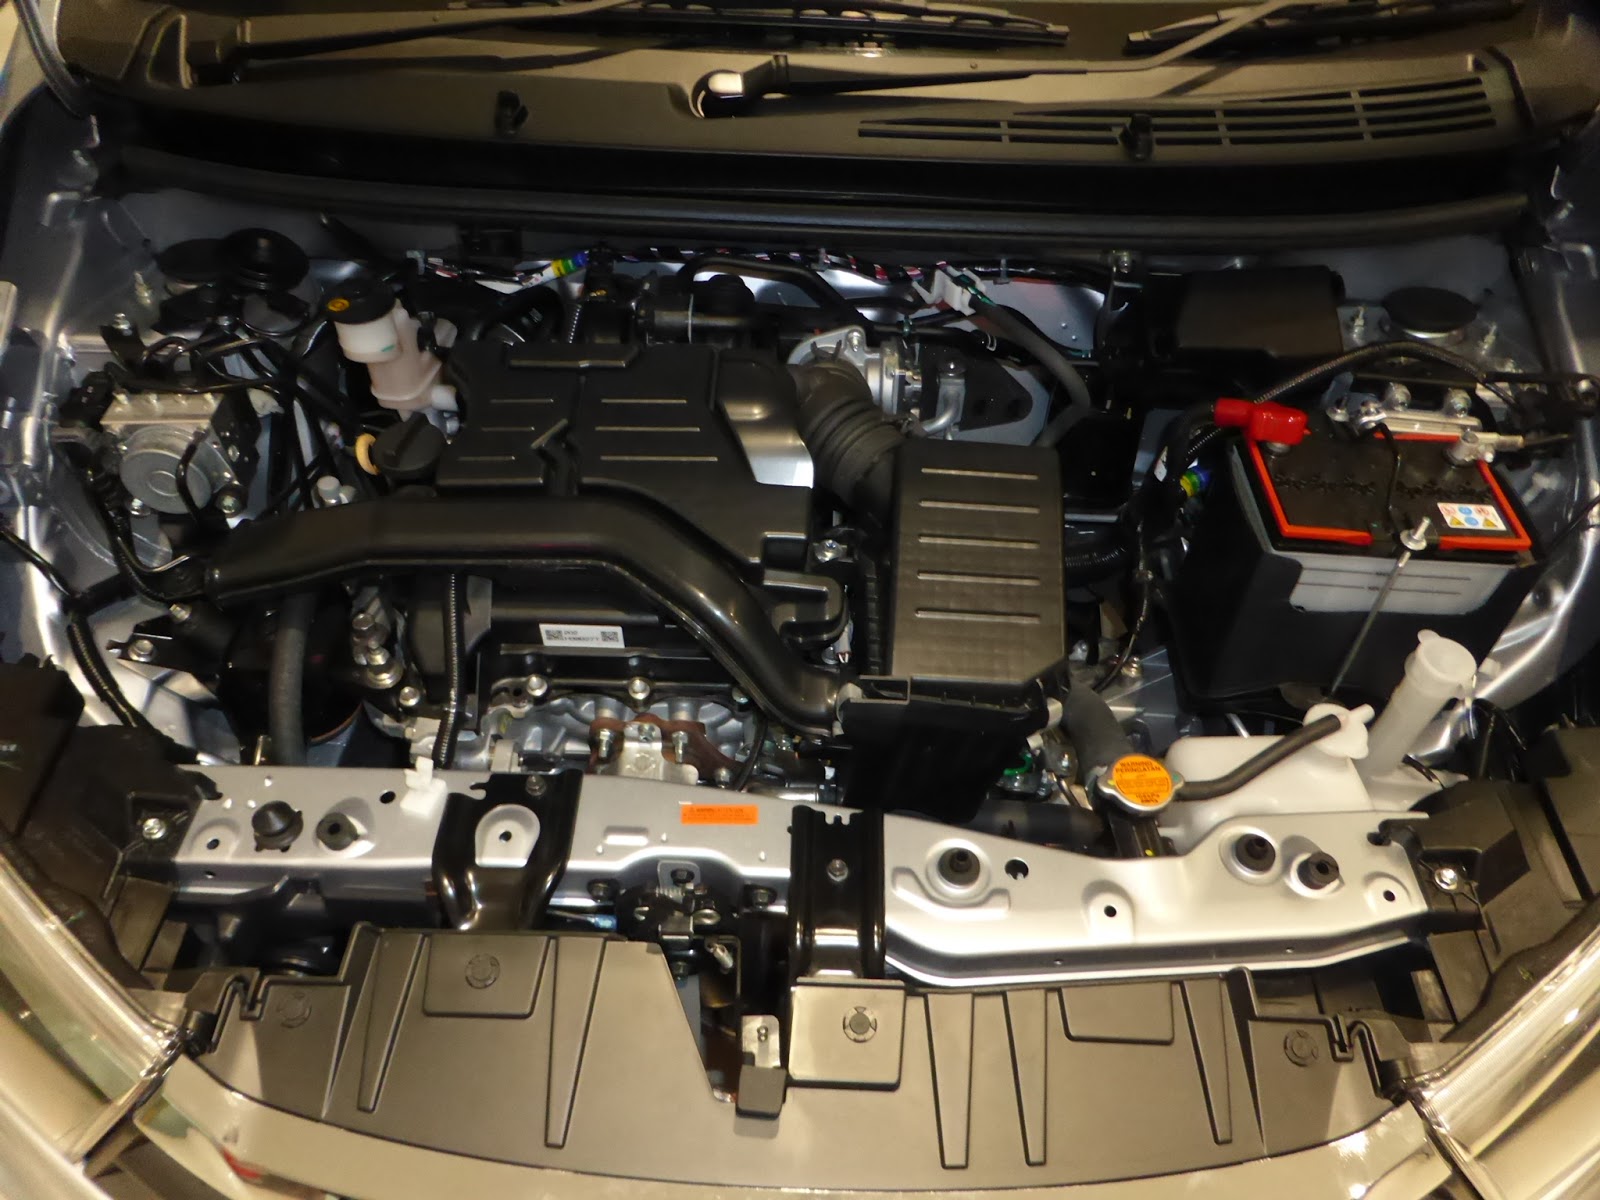 OTOREVIEW.MY - "otomobil" review: MEGA REVIEW: Perodua 